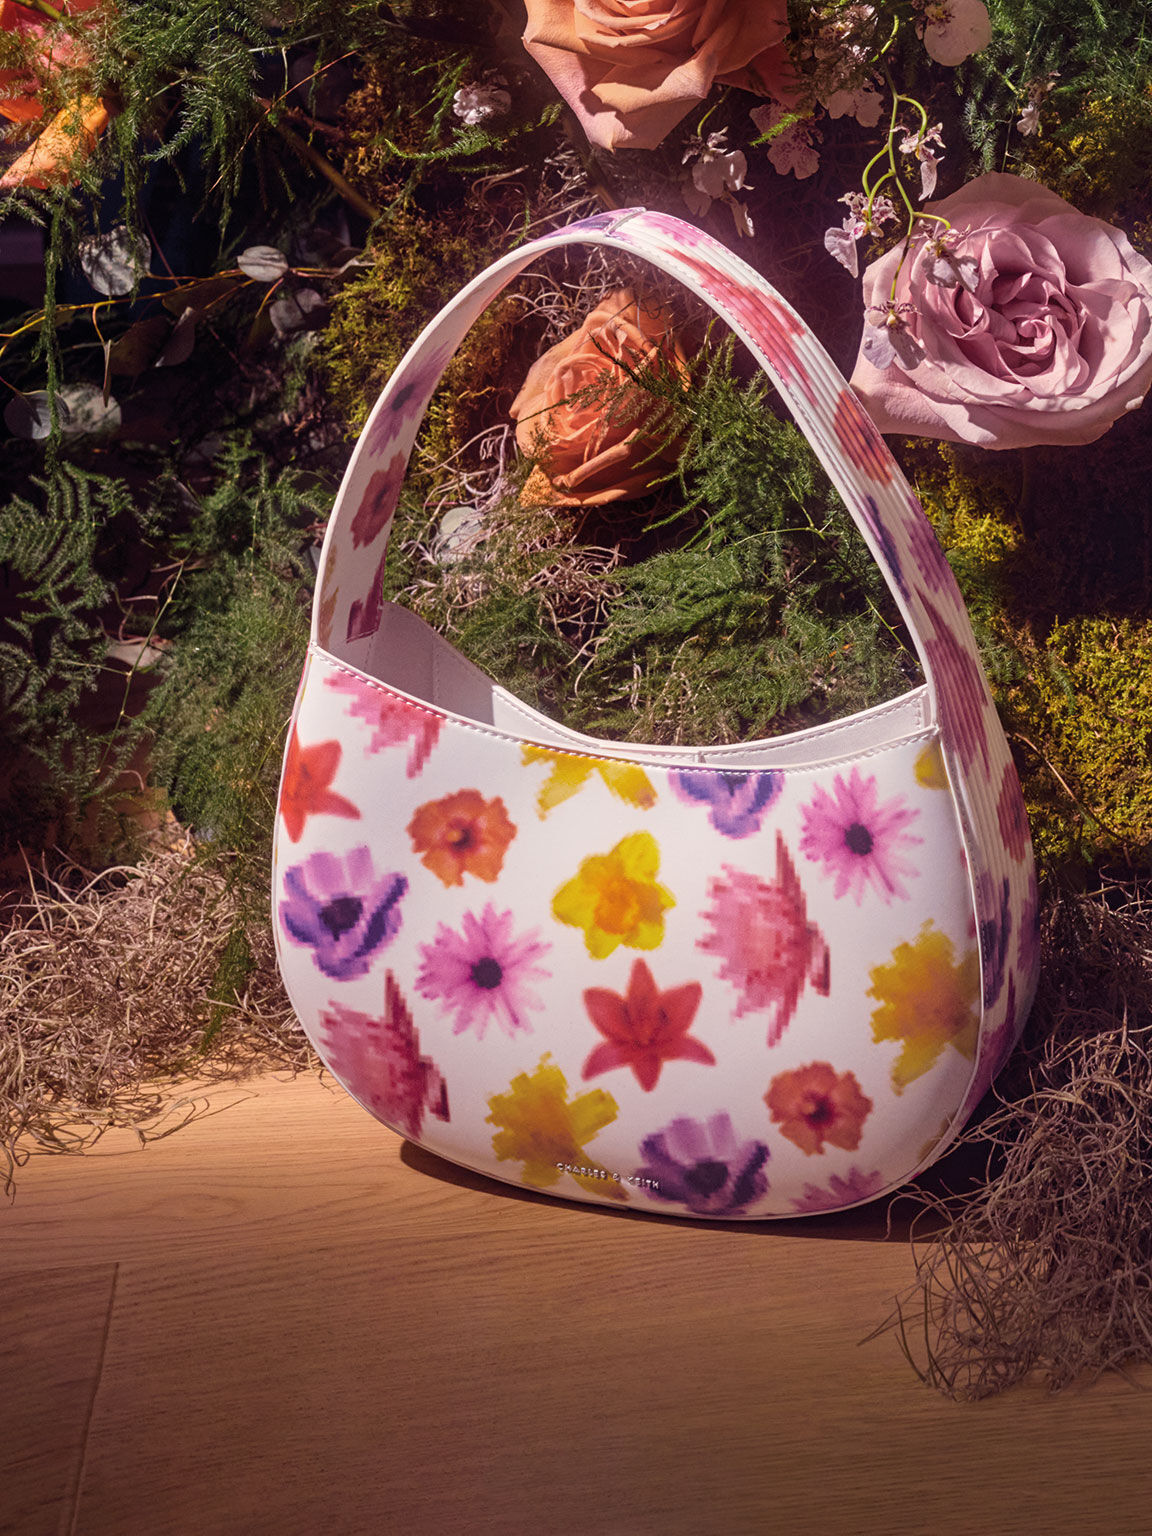 Coda Floral-Print Top Handle Hobo Bag - Multi